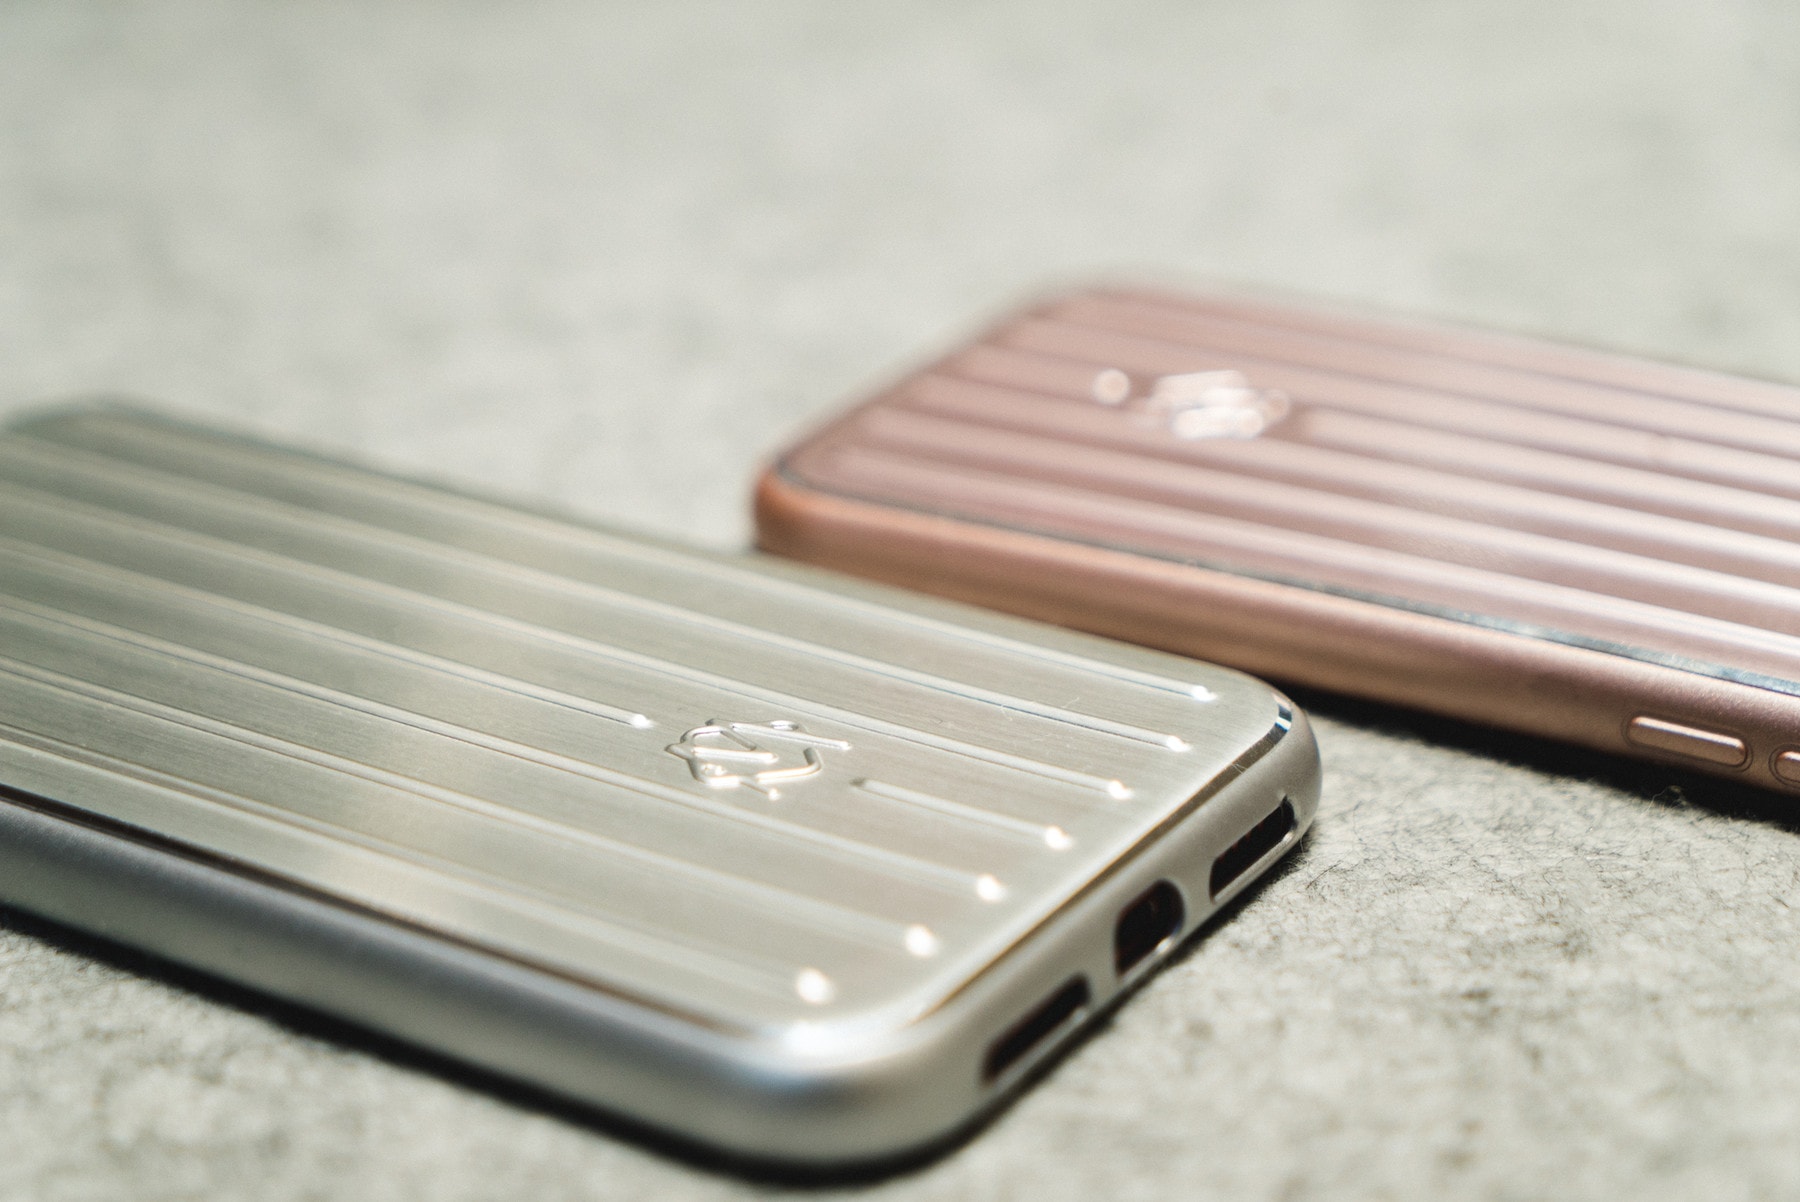 RIMOWA Aluminium Groove Apple iPhone Case Closer Look Pink Silver